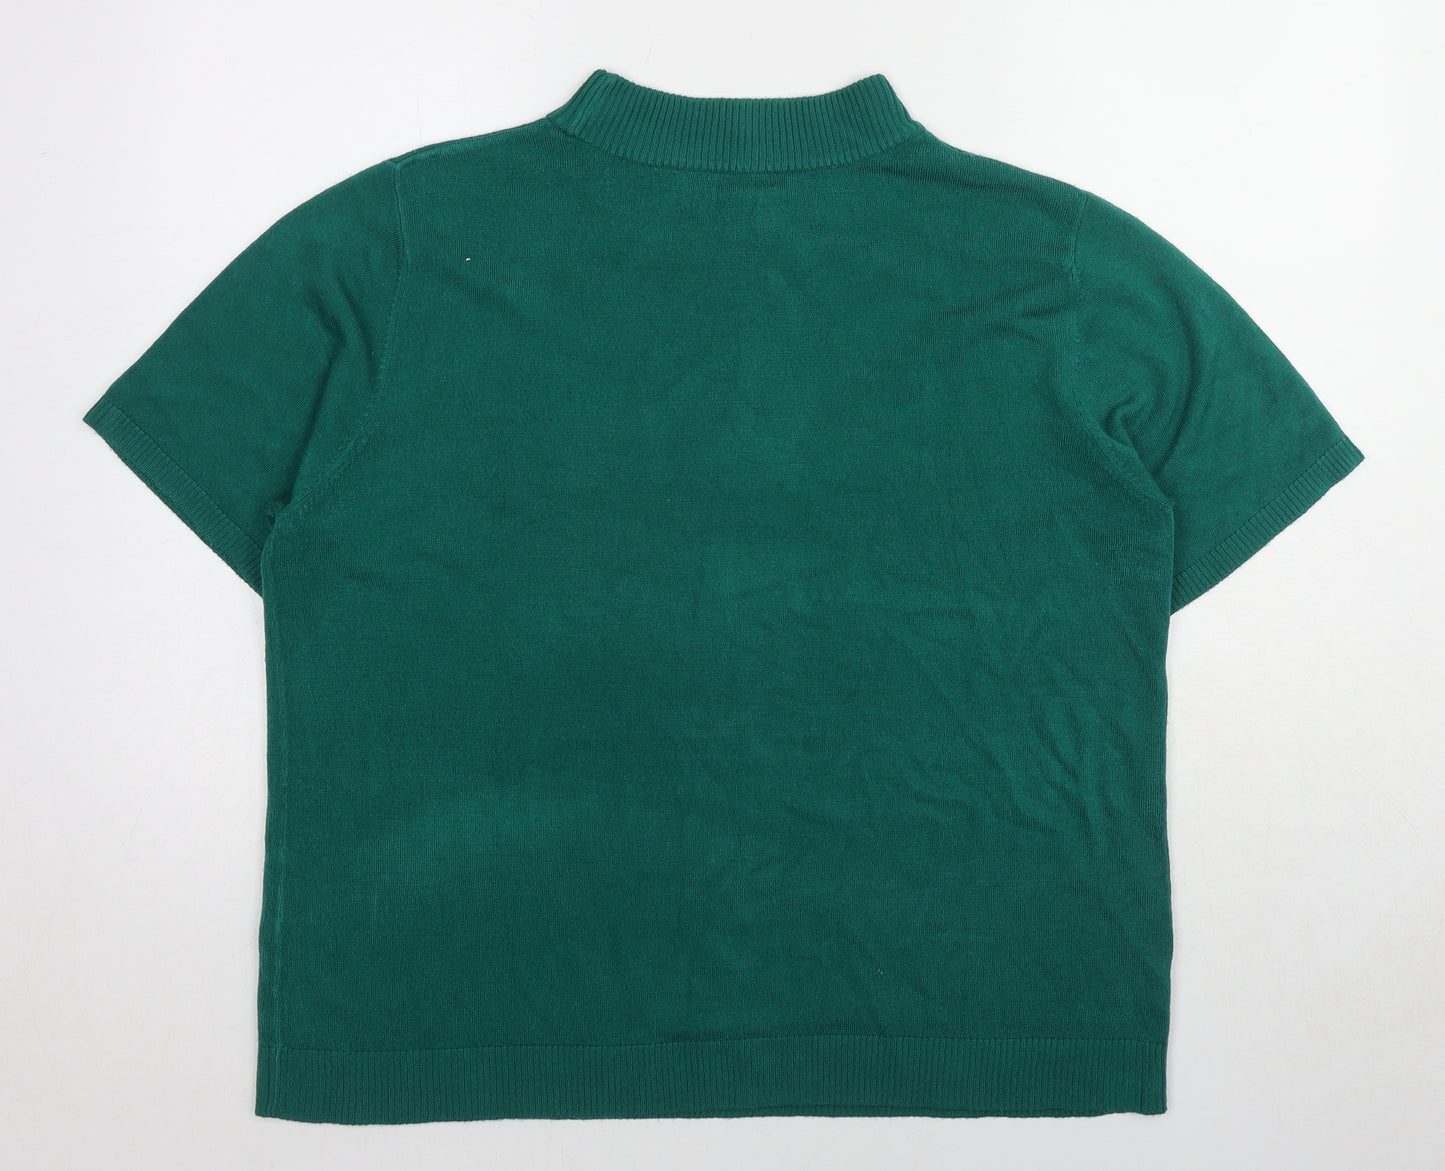 Damart Womens Green Mock Neck Acrylic Pullover Jumper Size 22 - Size 22-24